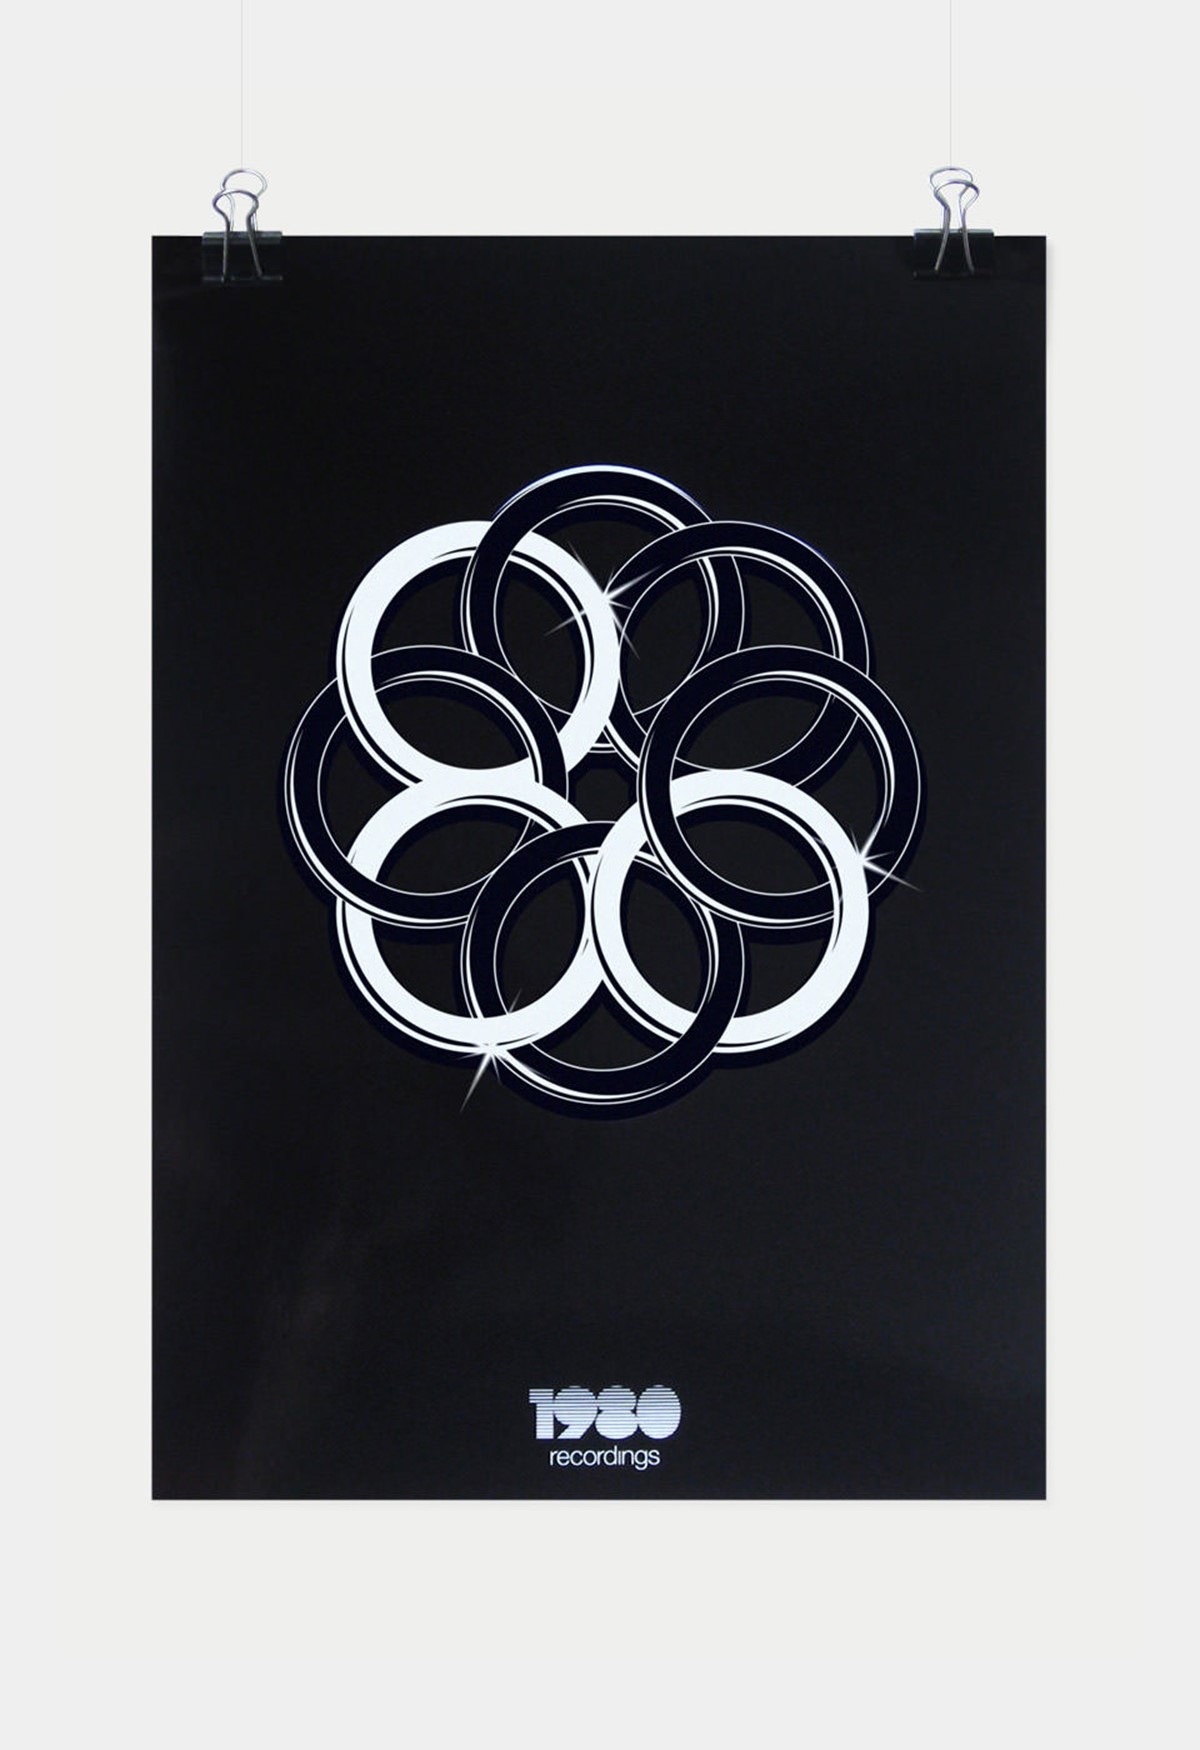 1980 Recordings. Interlocked shiny rings logo poster. Brand identity design by Superfried.